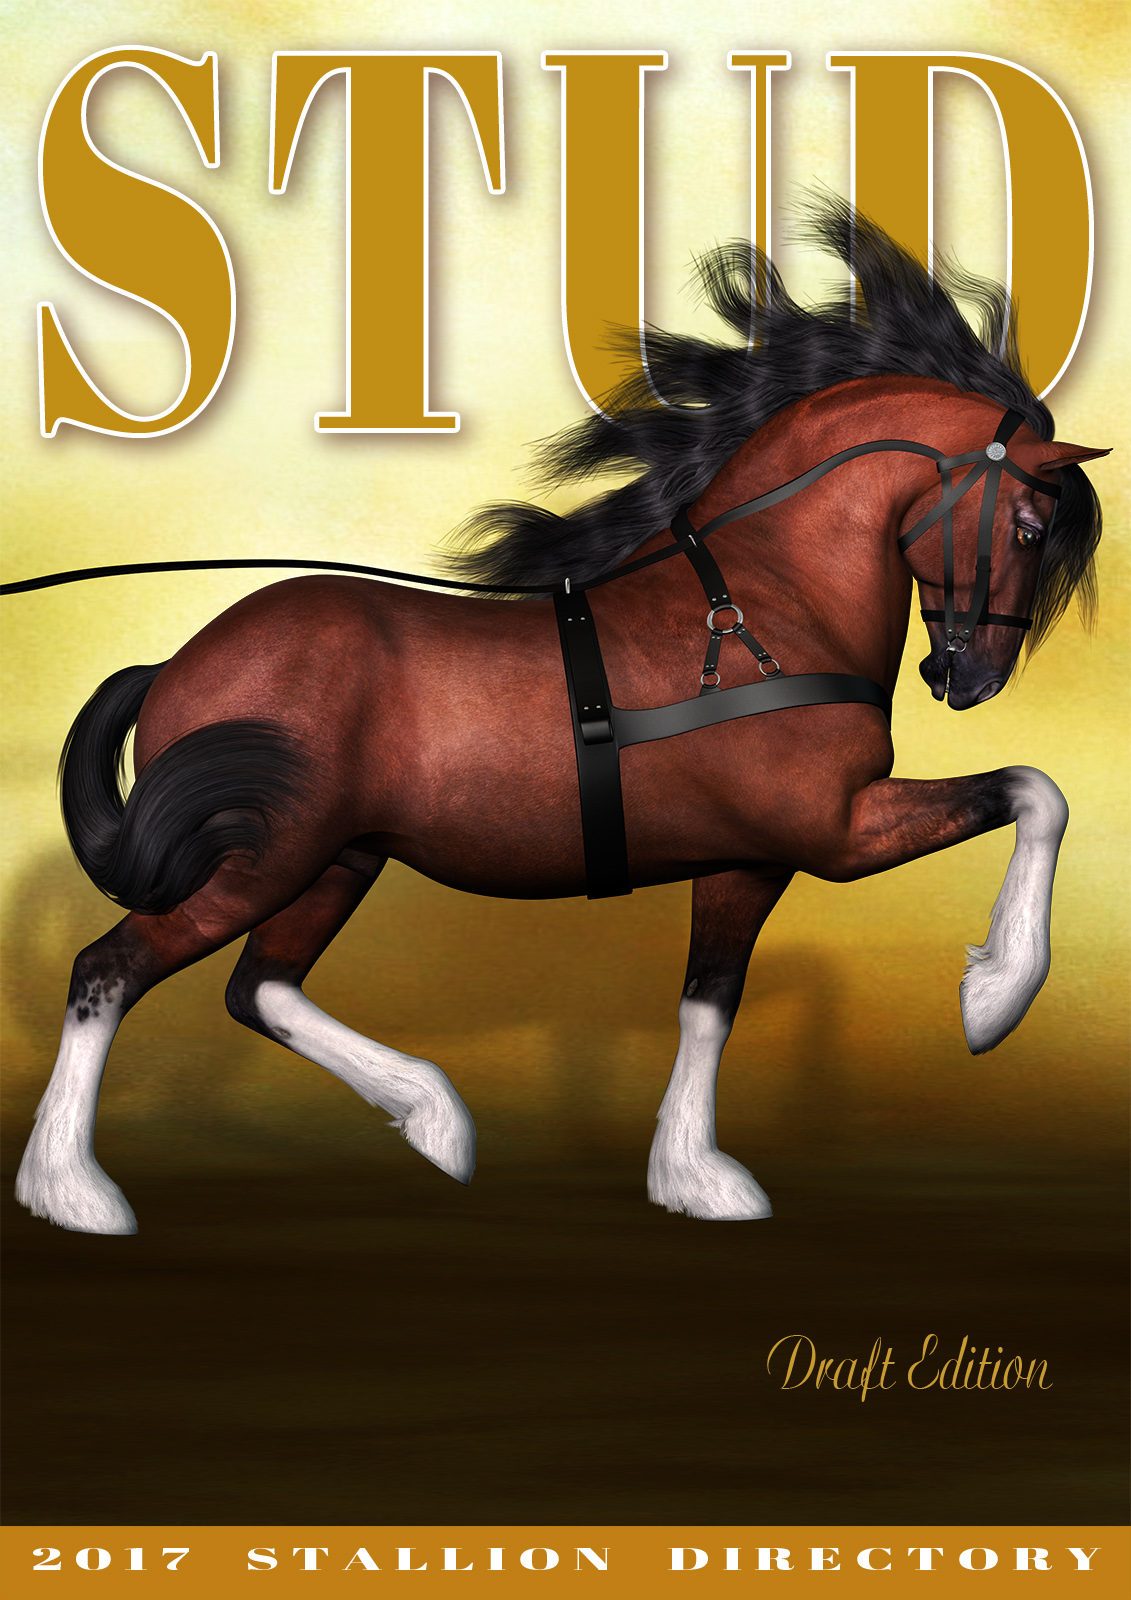 Magazine Cover - Stallion Directory - Draft Edition